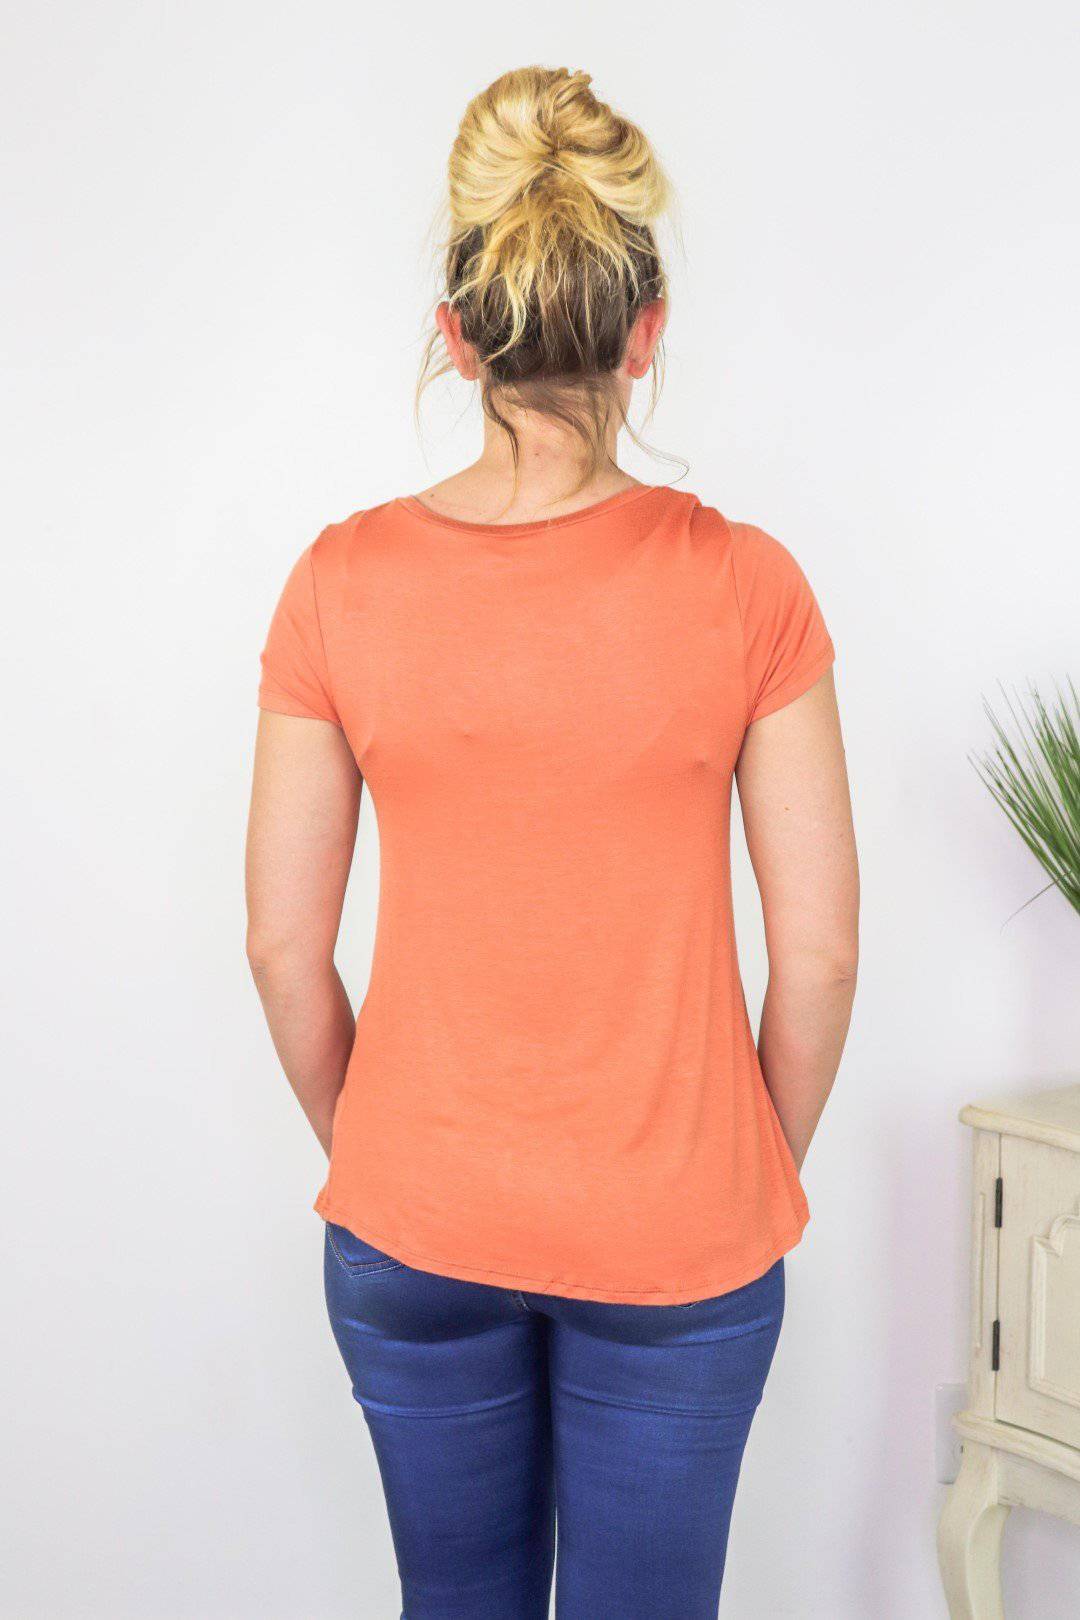 Orange Spice Short Sleeve Top - Select Trends Boutique